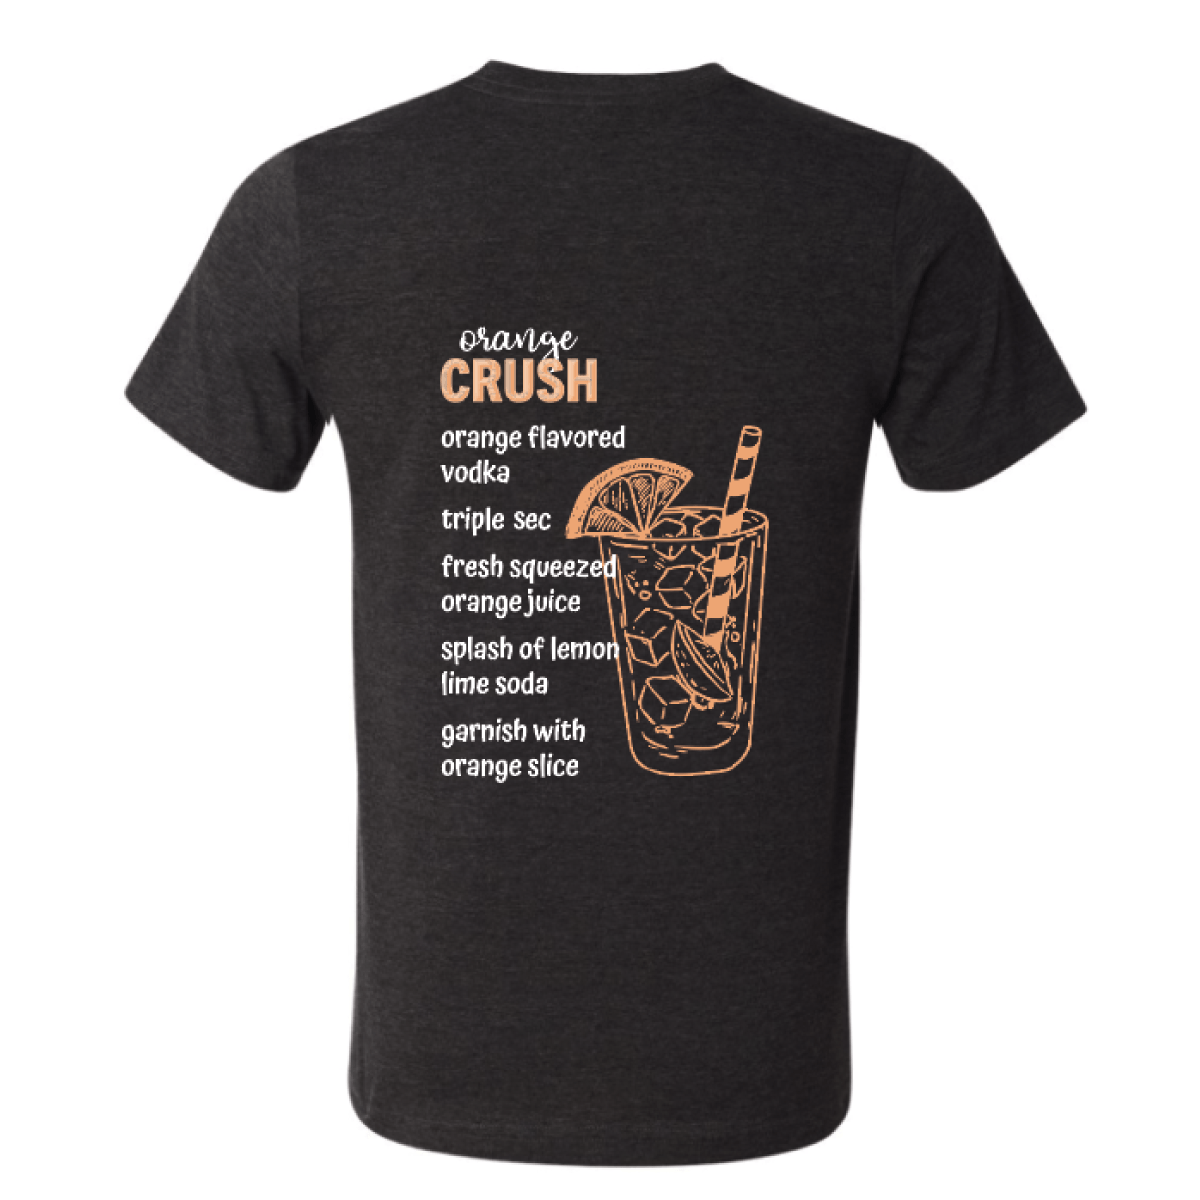 Orange Crush (Black Heather) / Shirt - Route One Apparel